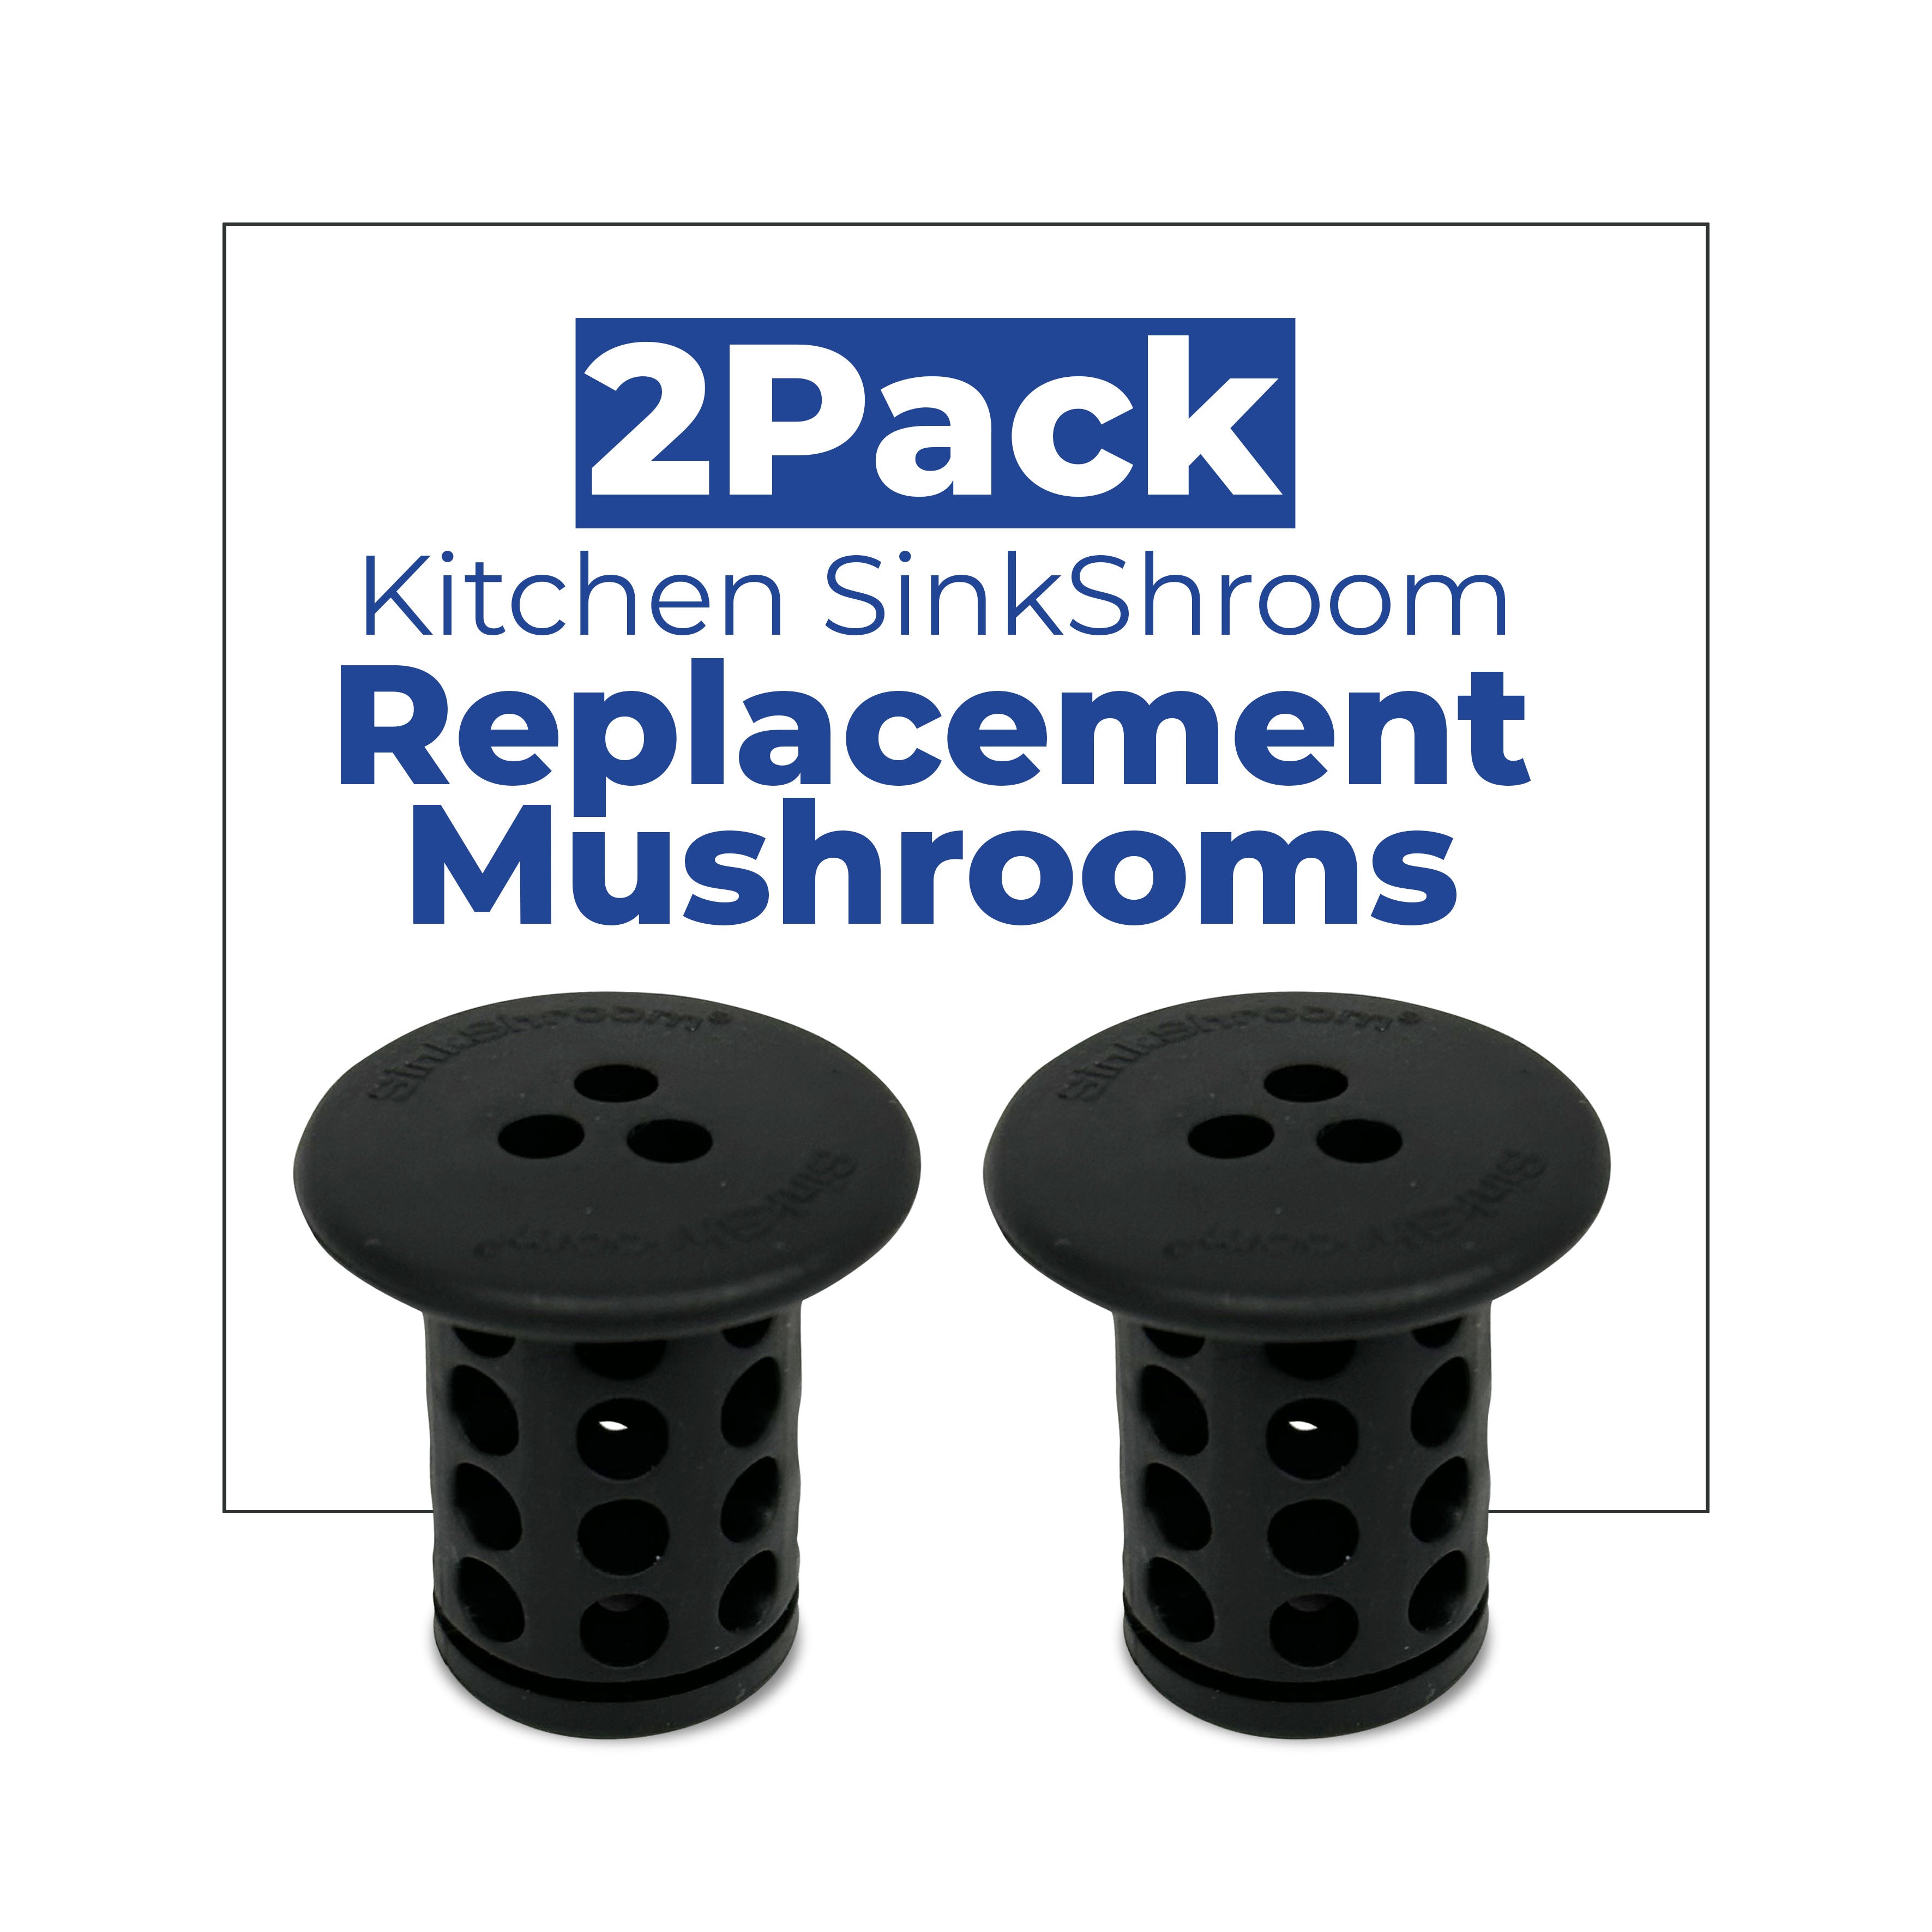 REPLACEMENT MINI MUSHROOM 2-PACK FOR KITCHEN SINKSHROOM